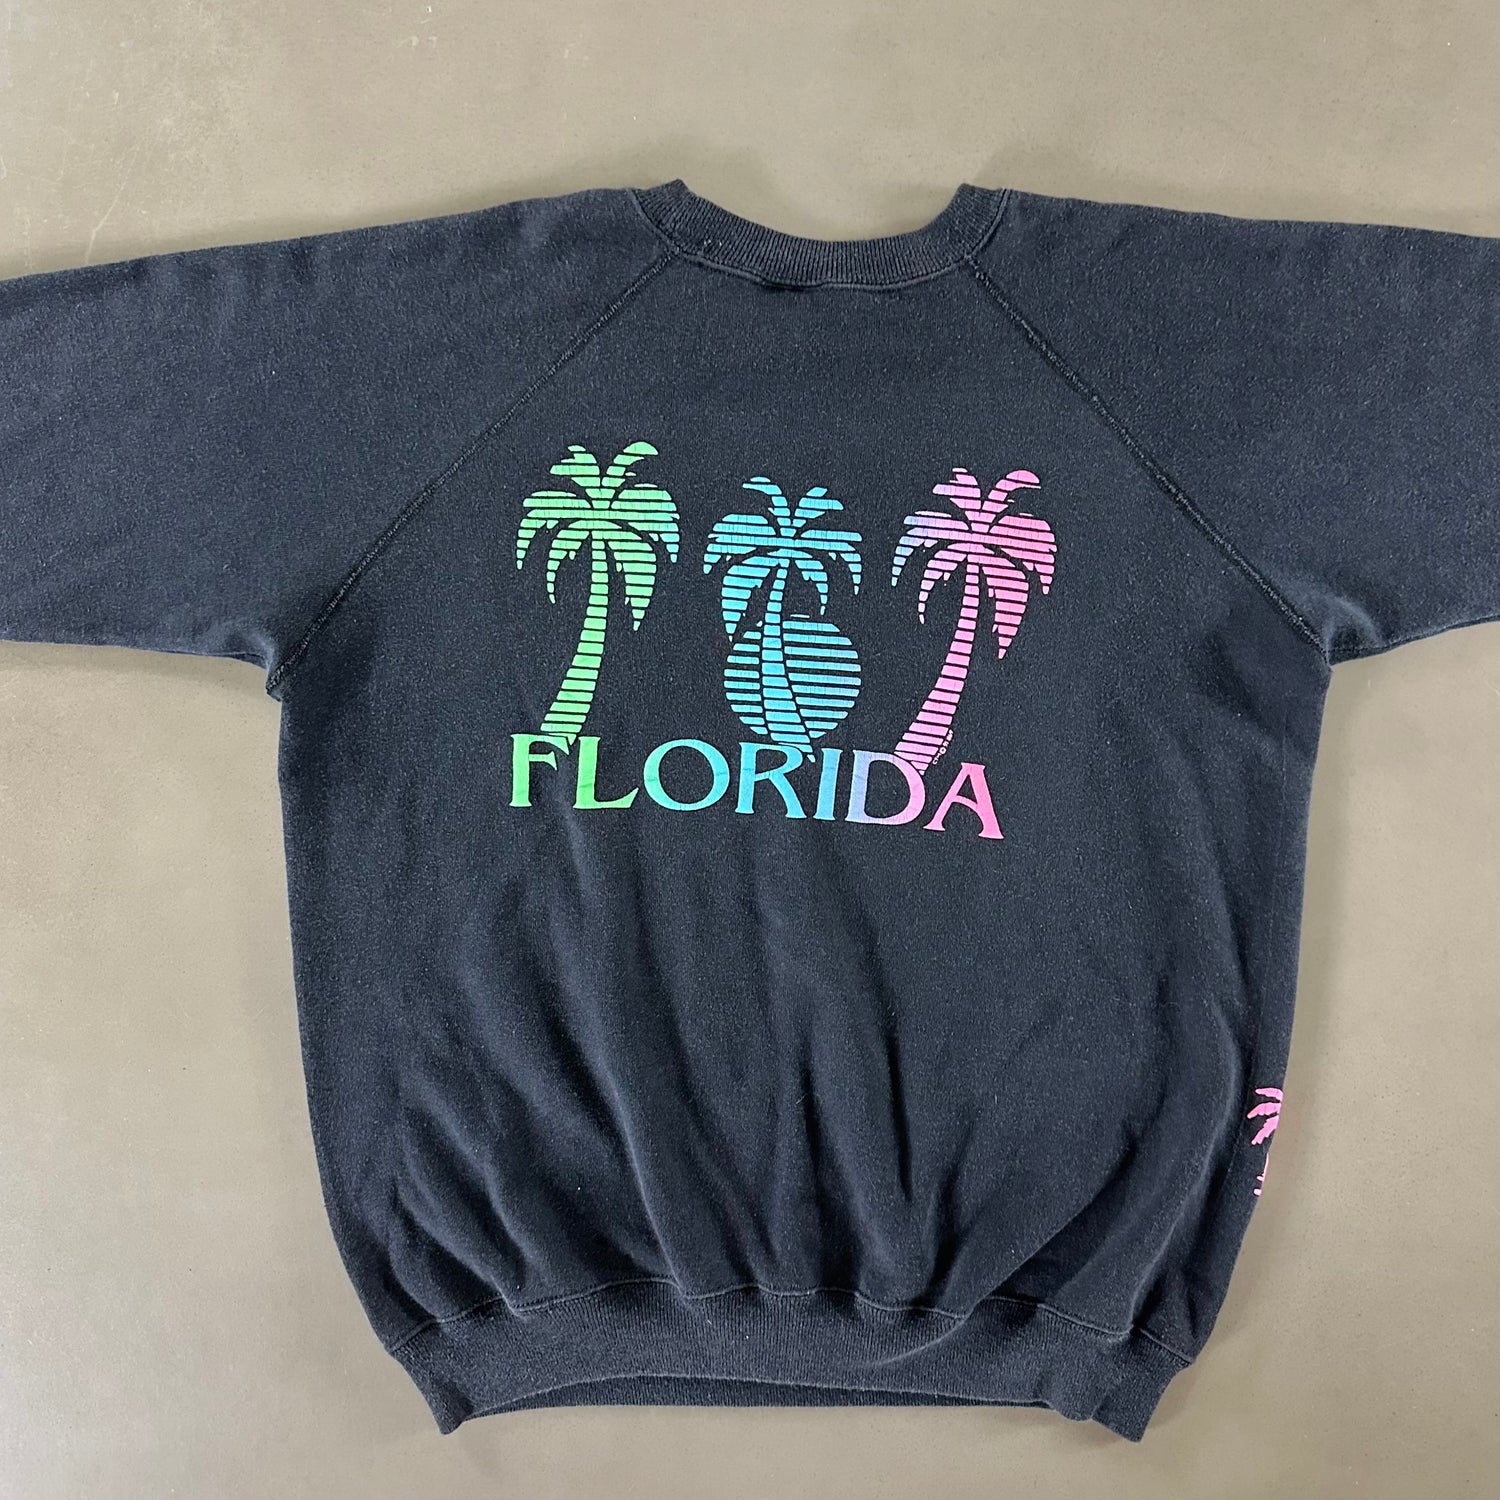 Vintage 1991 Florida Sweatshirt size XL